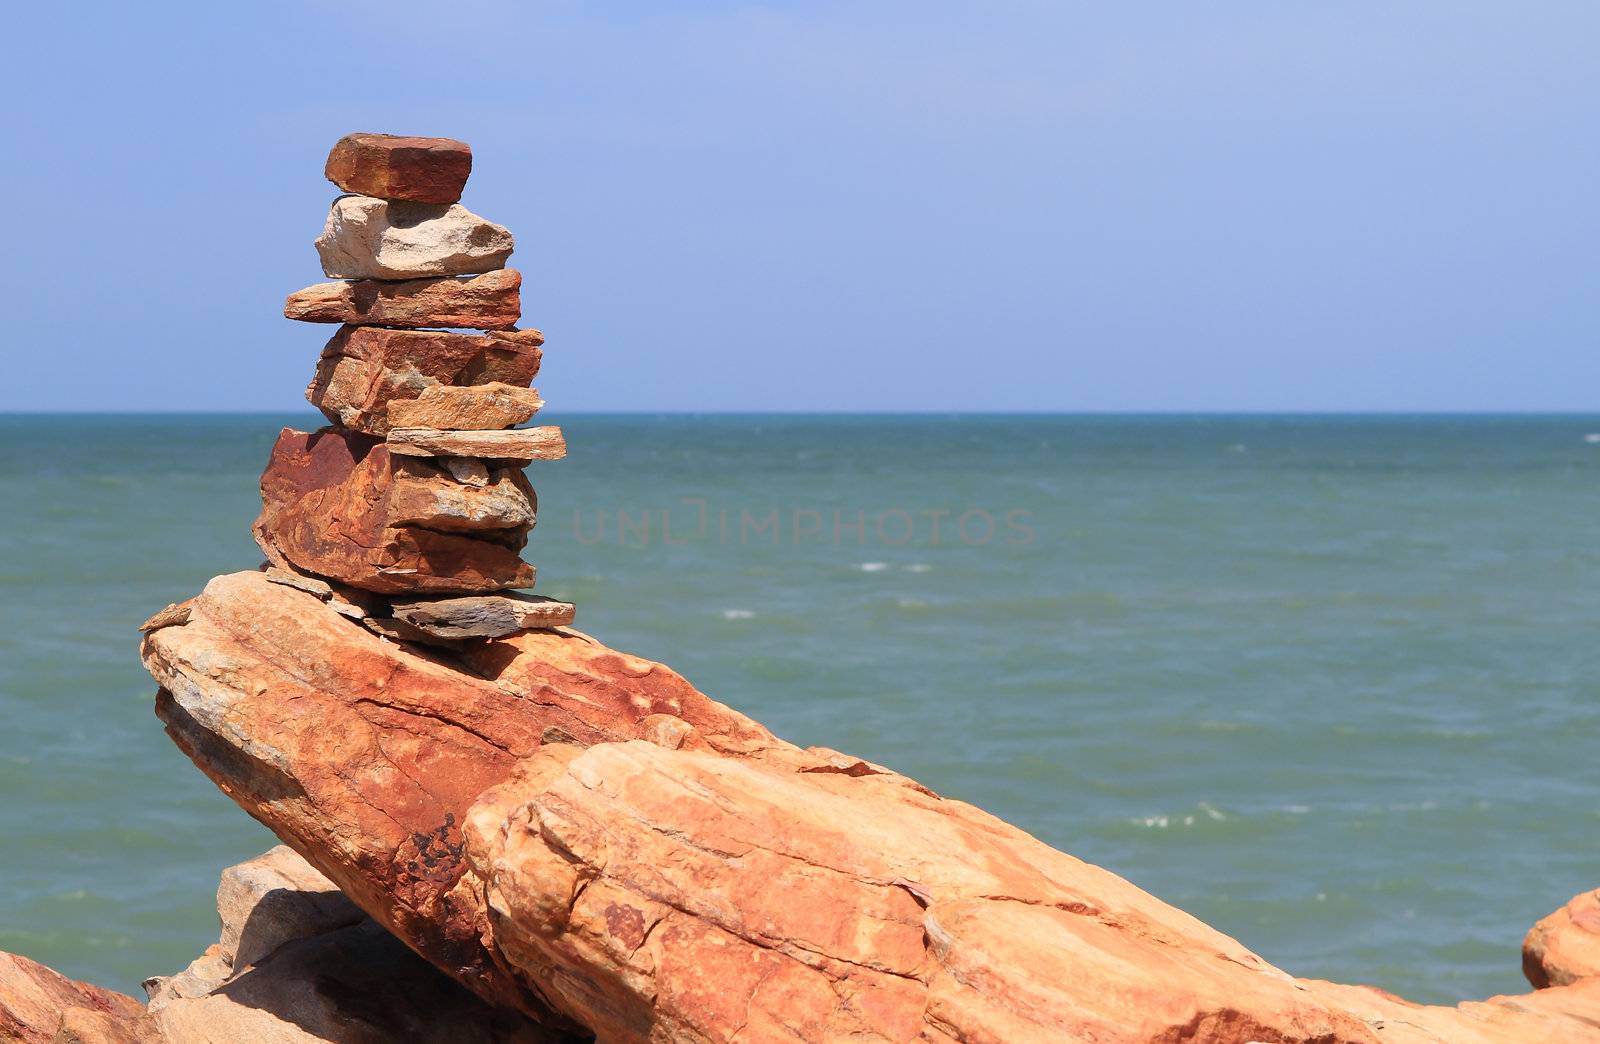 Pebble stone pyramid against blue sea